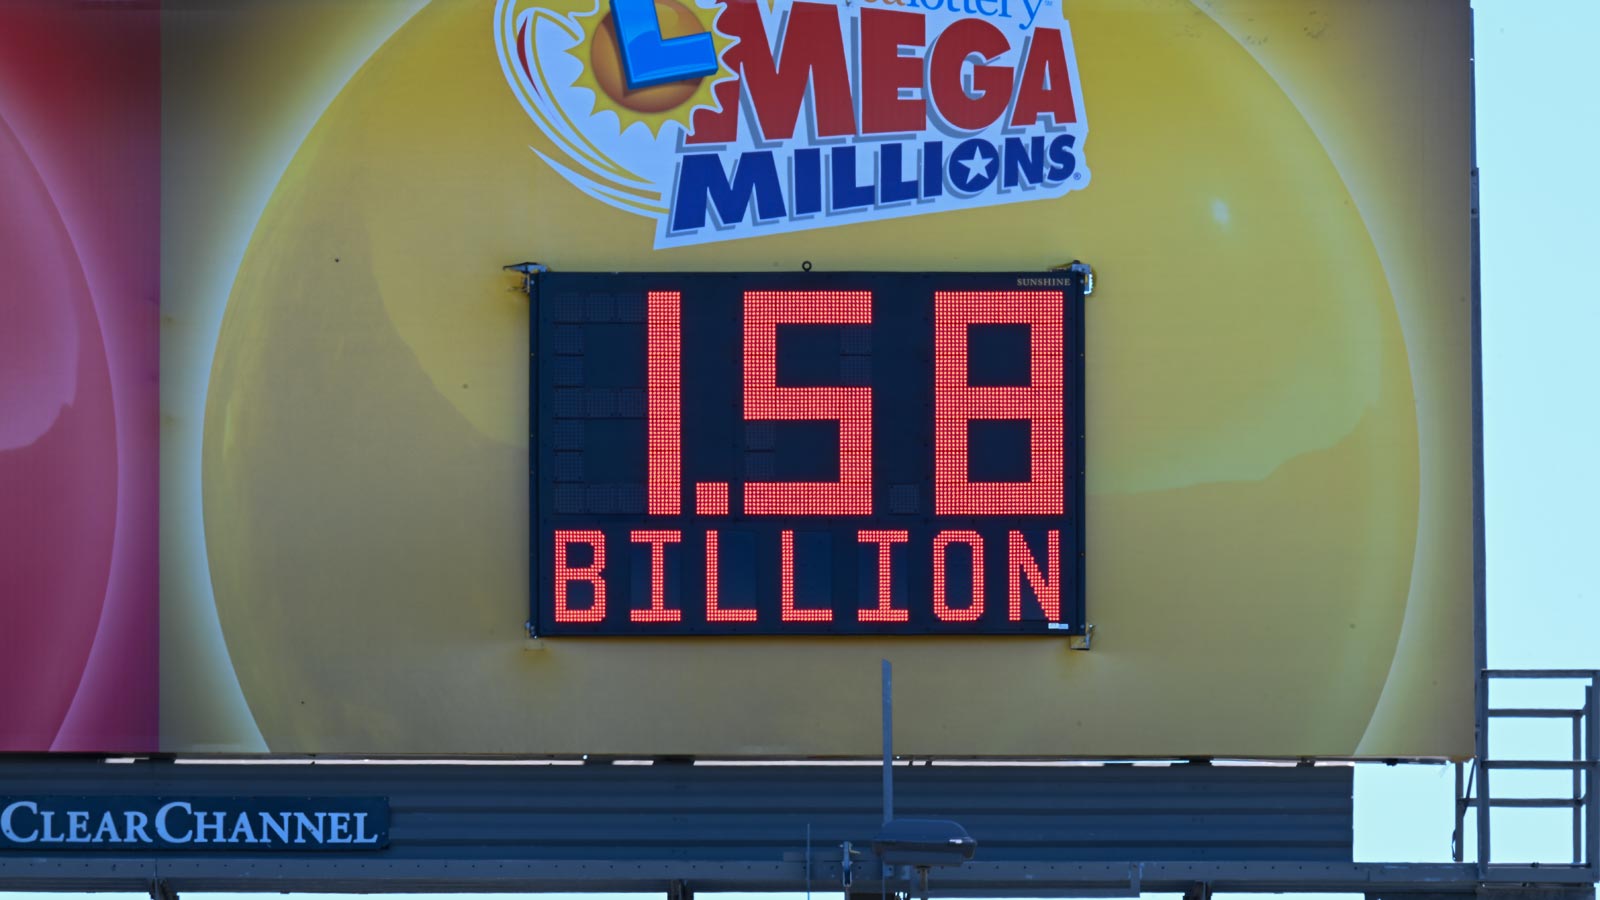 The highest prize yet of $1.58 Billion written on Mega Millions bilboard sign